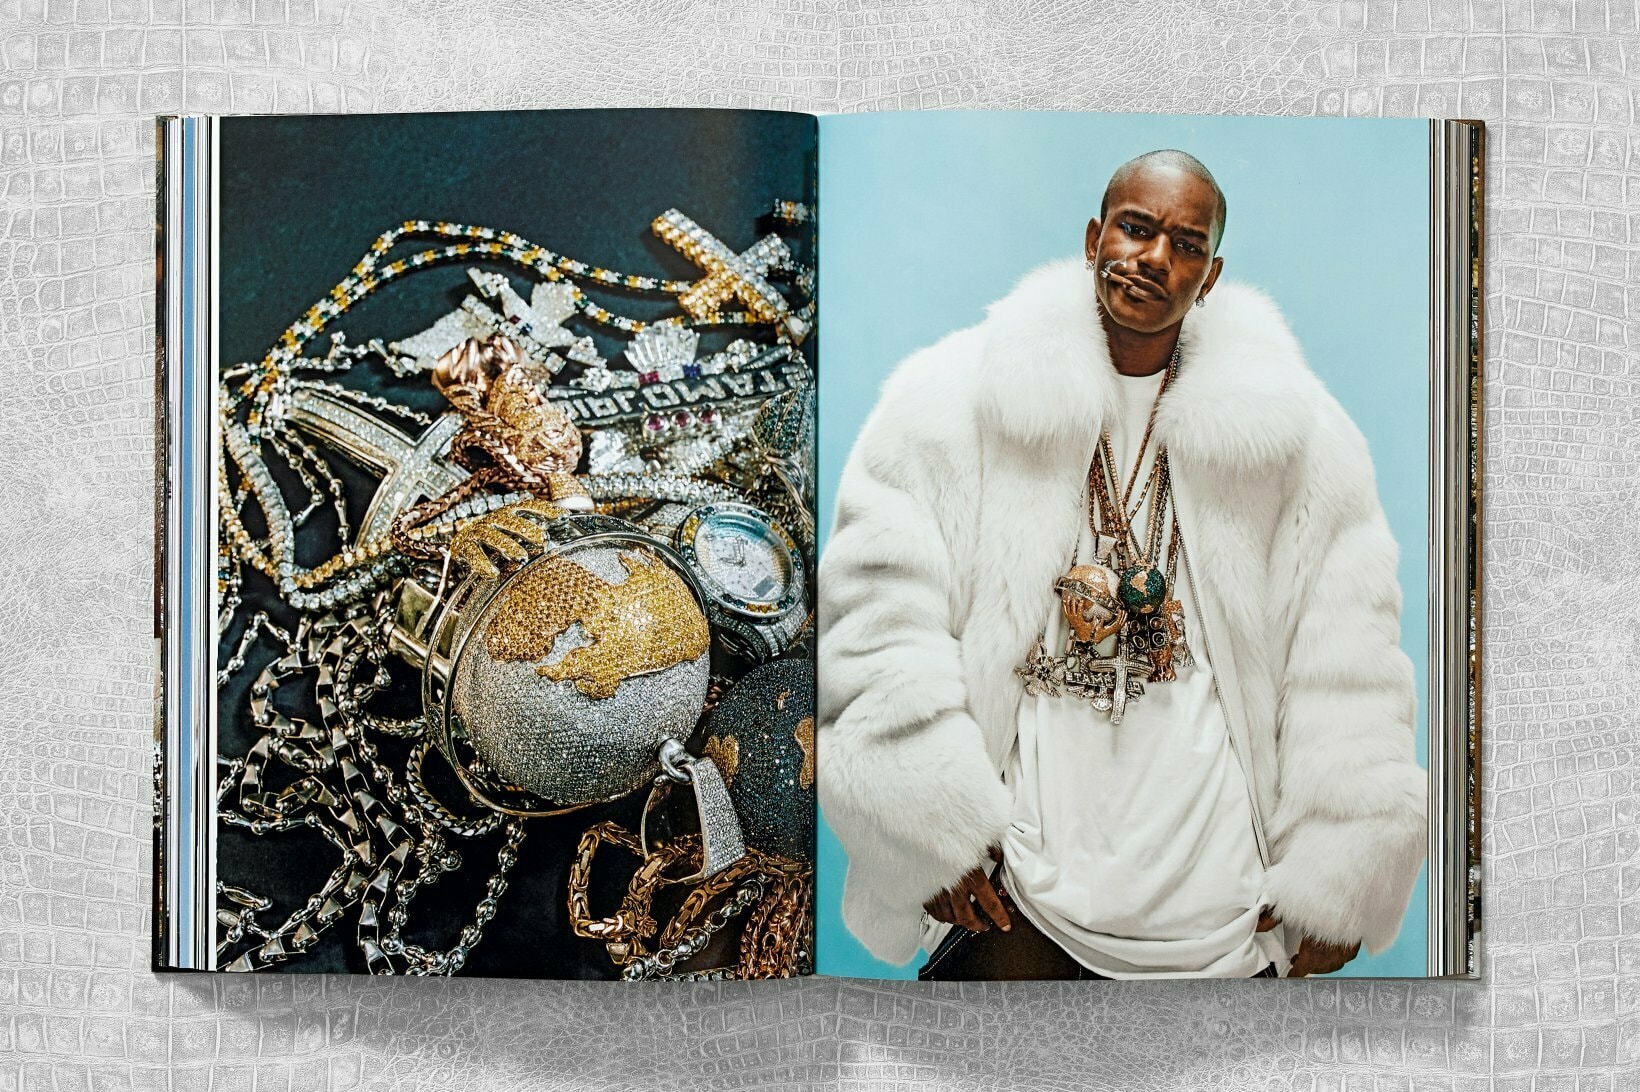 TASCHEN 重磅新书《Ice Cold: A Hip-Hop Jewelry History》正式登场